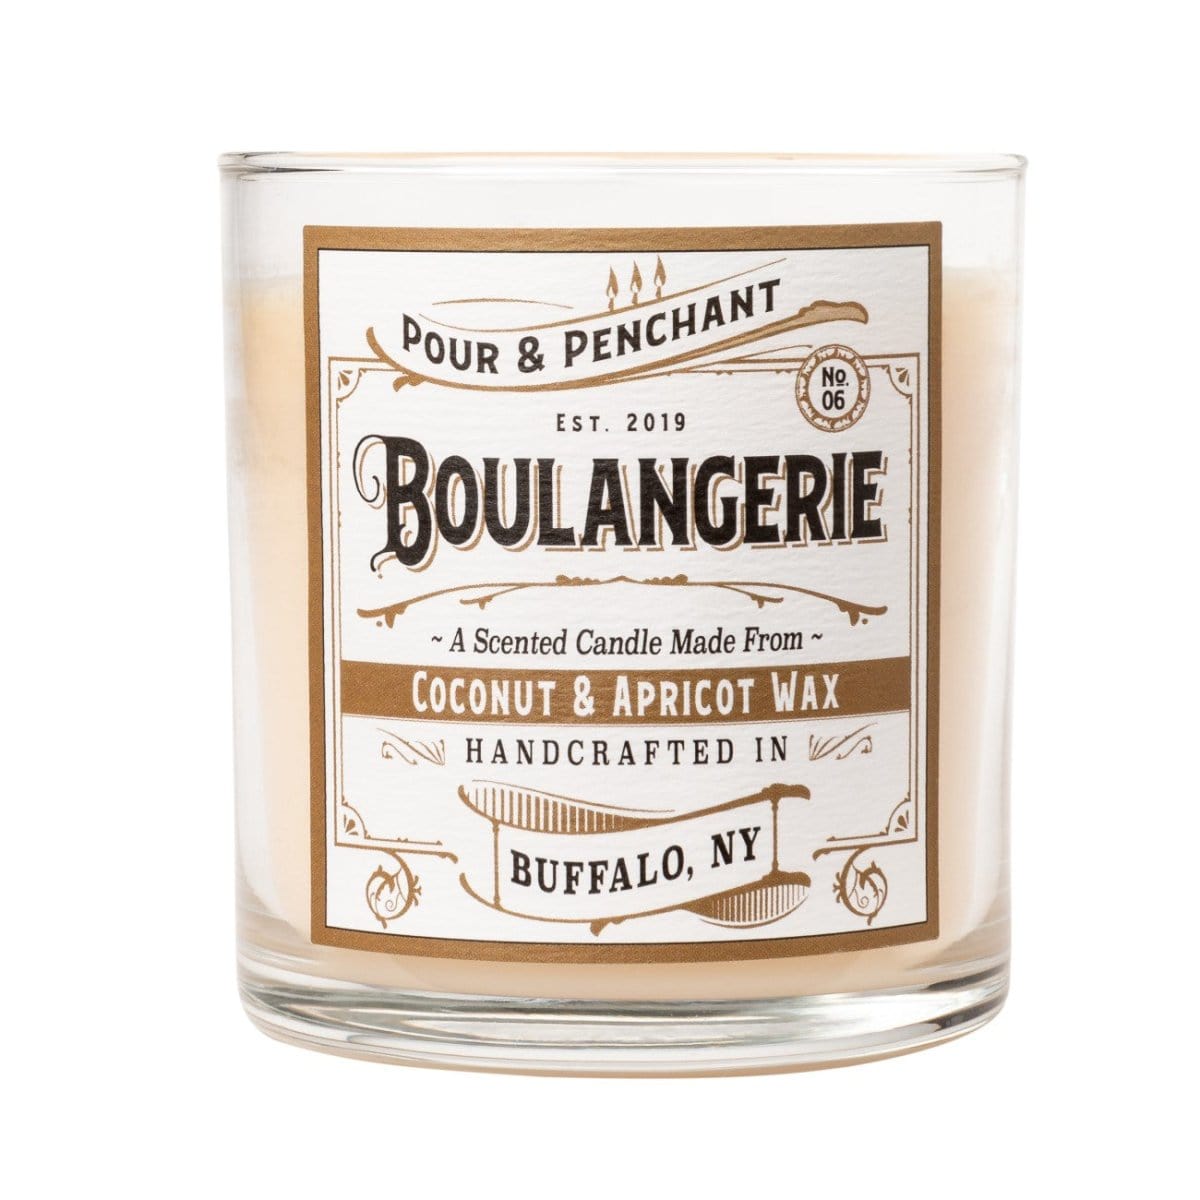 Pour & Penchant 10 oz Scented Candle - BOULANGERIE no.06 - Buttercream, Sugar & Vanilla